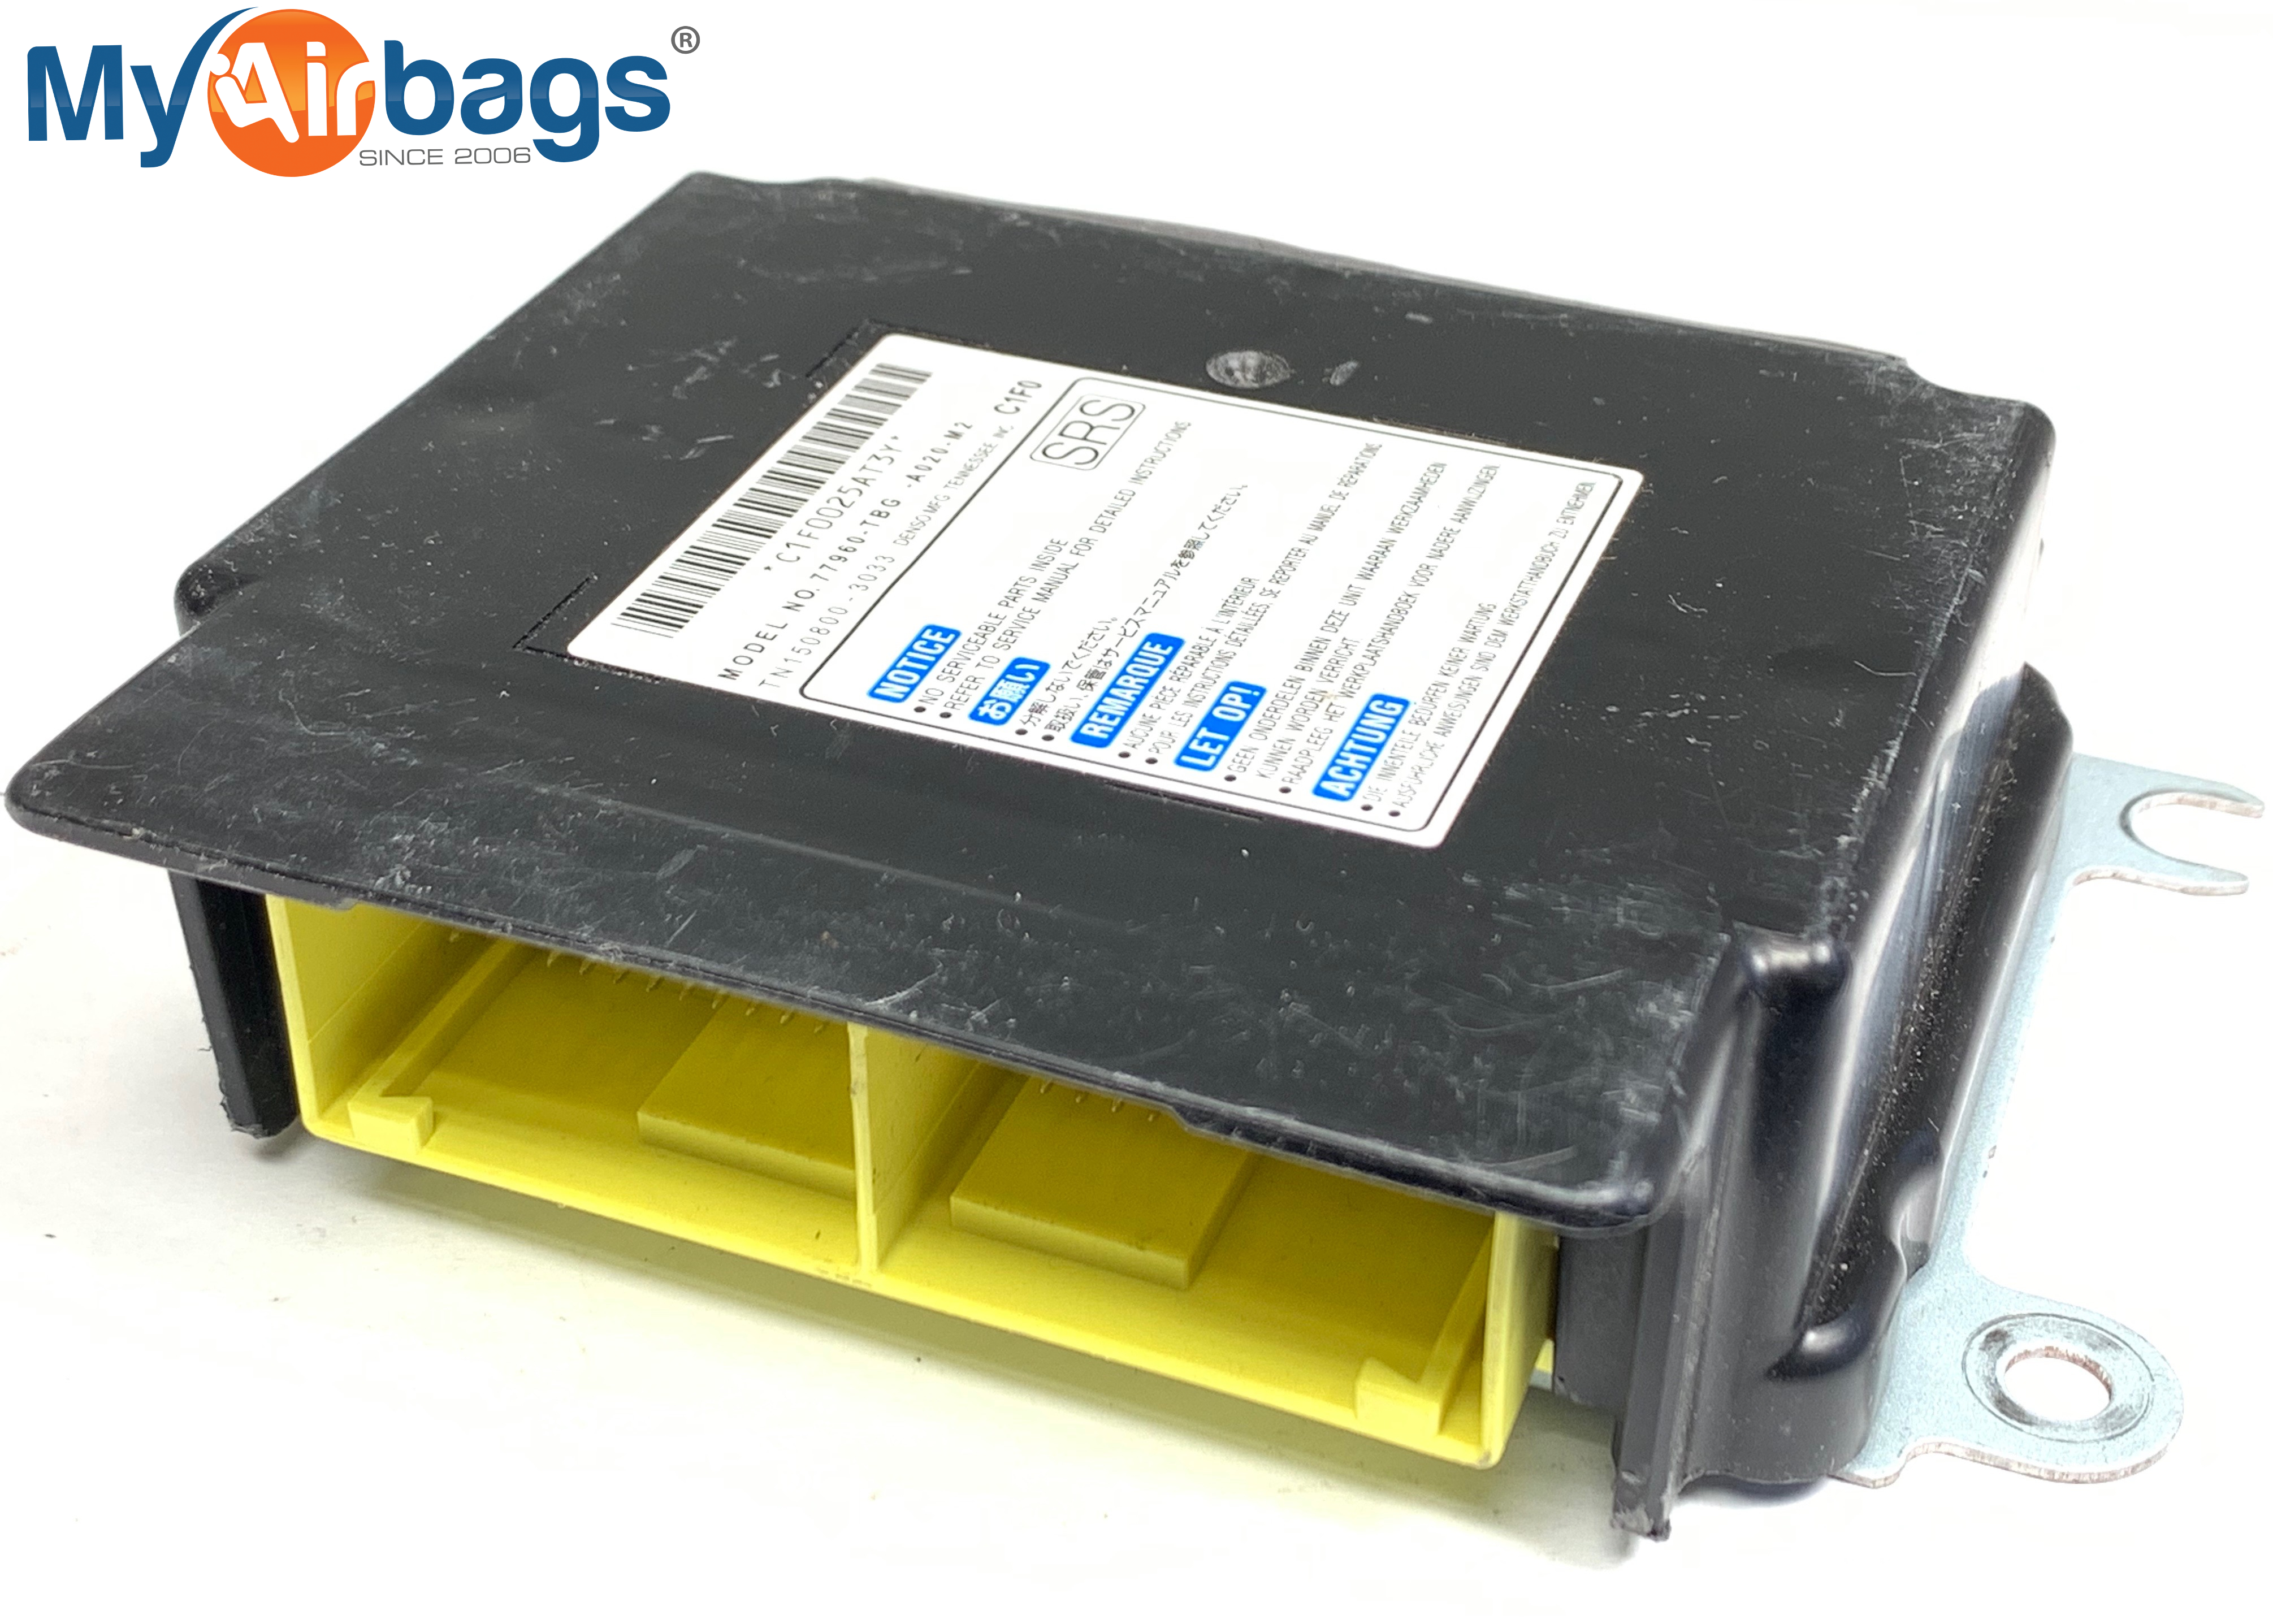 HONDA CIVIC SRS Airbag Computer Diagnostic Control Module PART #77960TBGA020M2